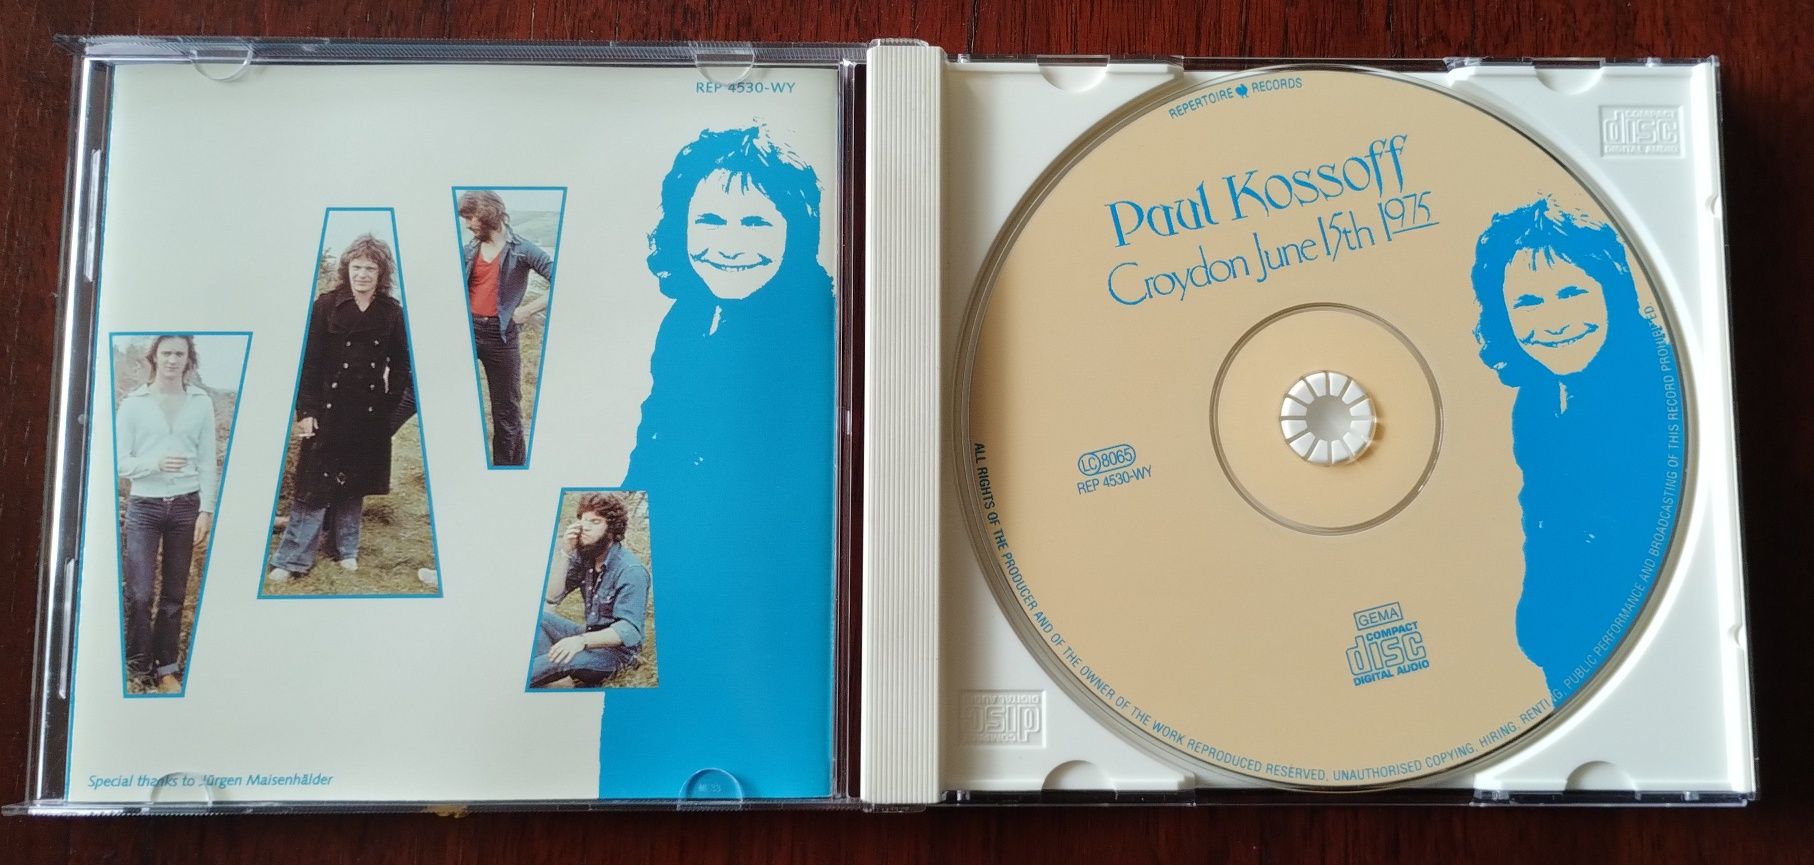 Paul Kossoff Live in Croydon June 15th 1975 CD